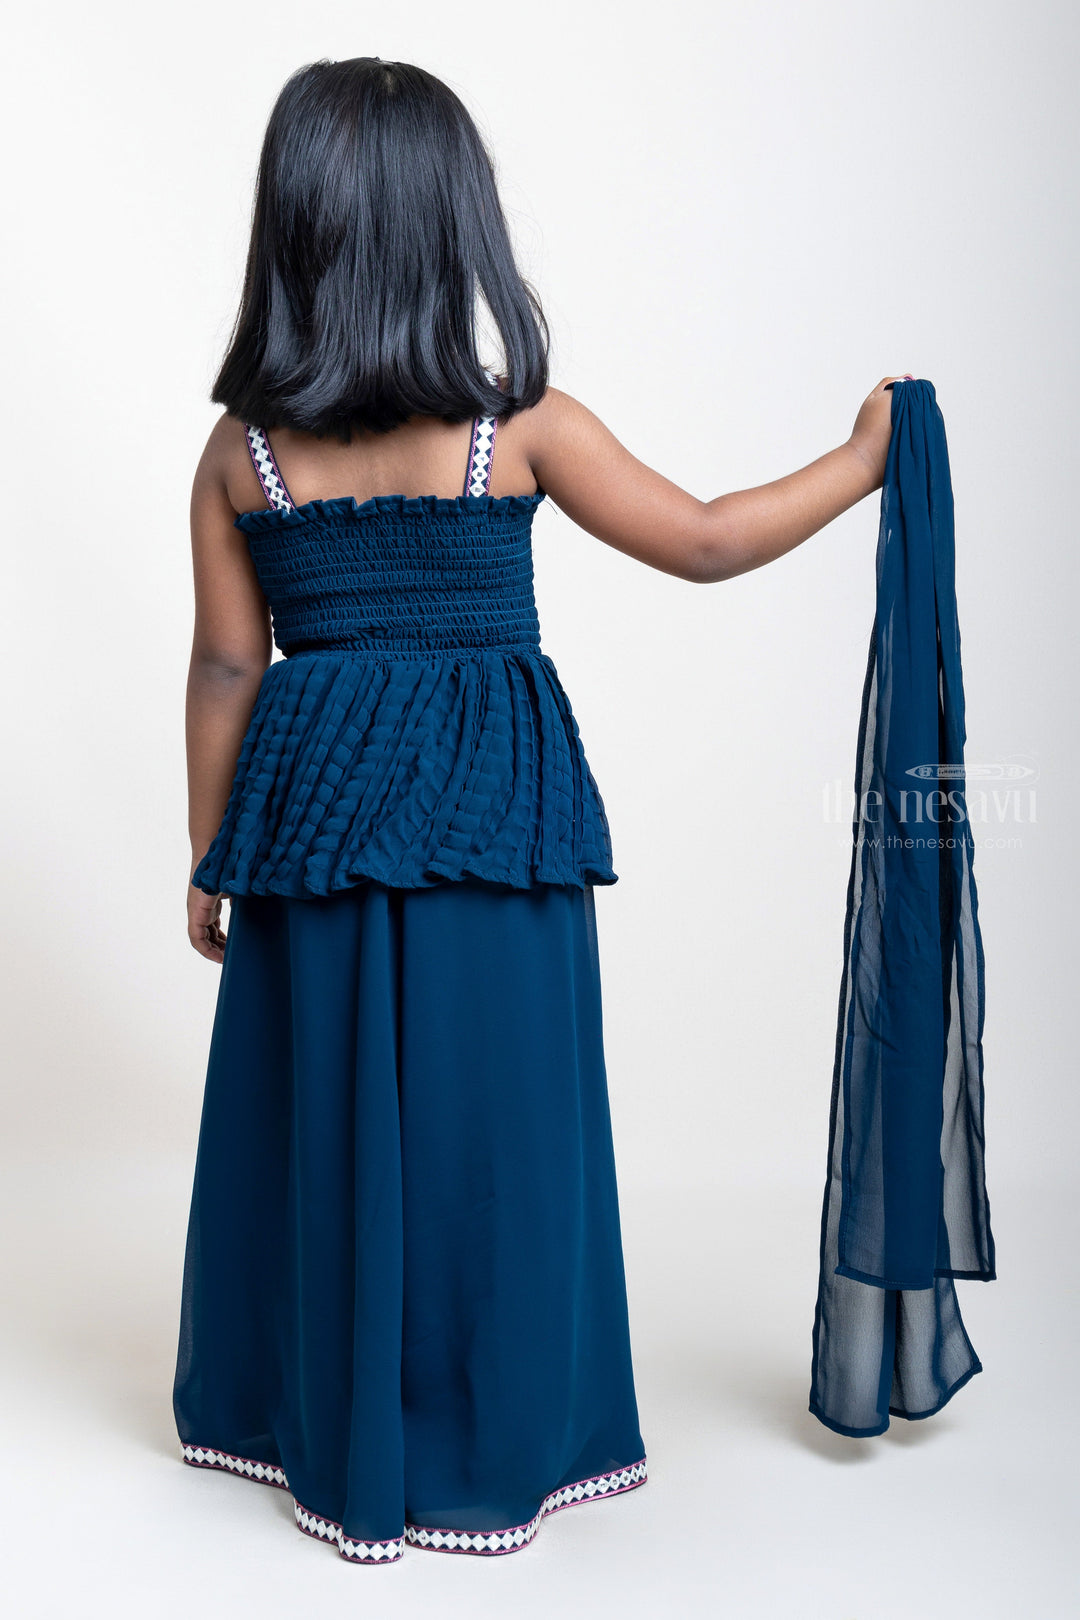 The Nesavu Girls Sharara / Plazo Set Navy Blue Embroidery Sequin Crushed Tunic Tops With Lace Trim Palazzo psr silks Nesavu